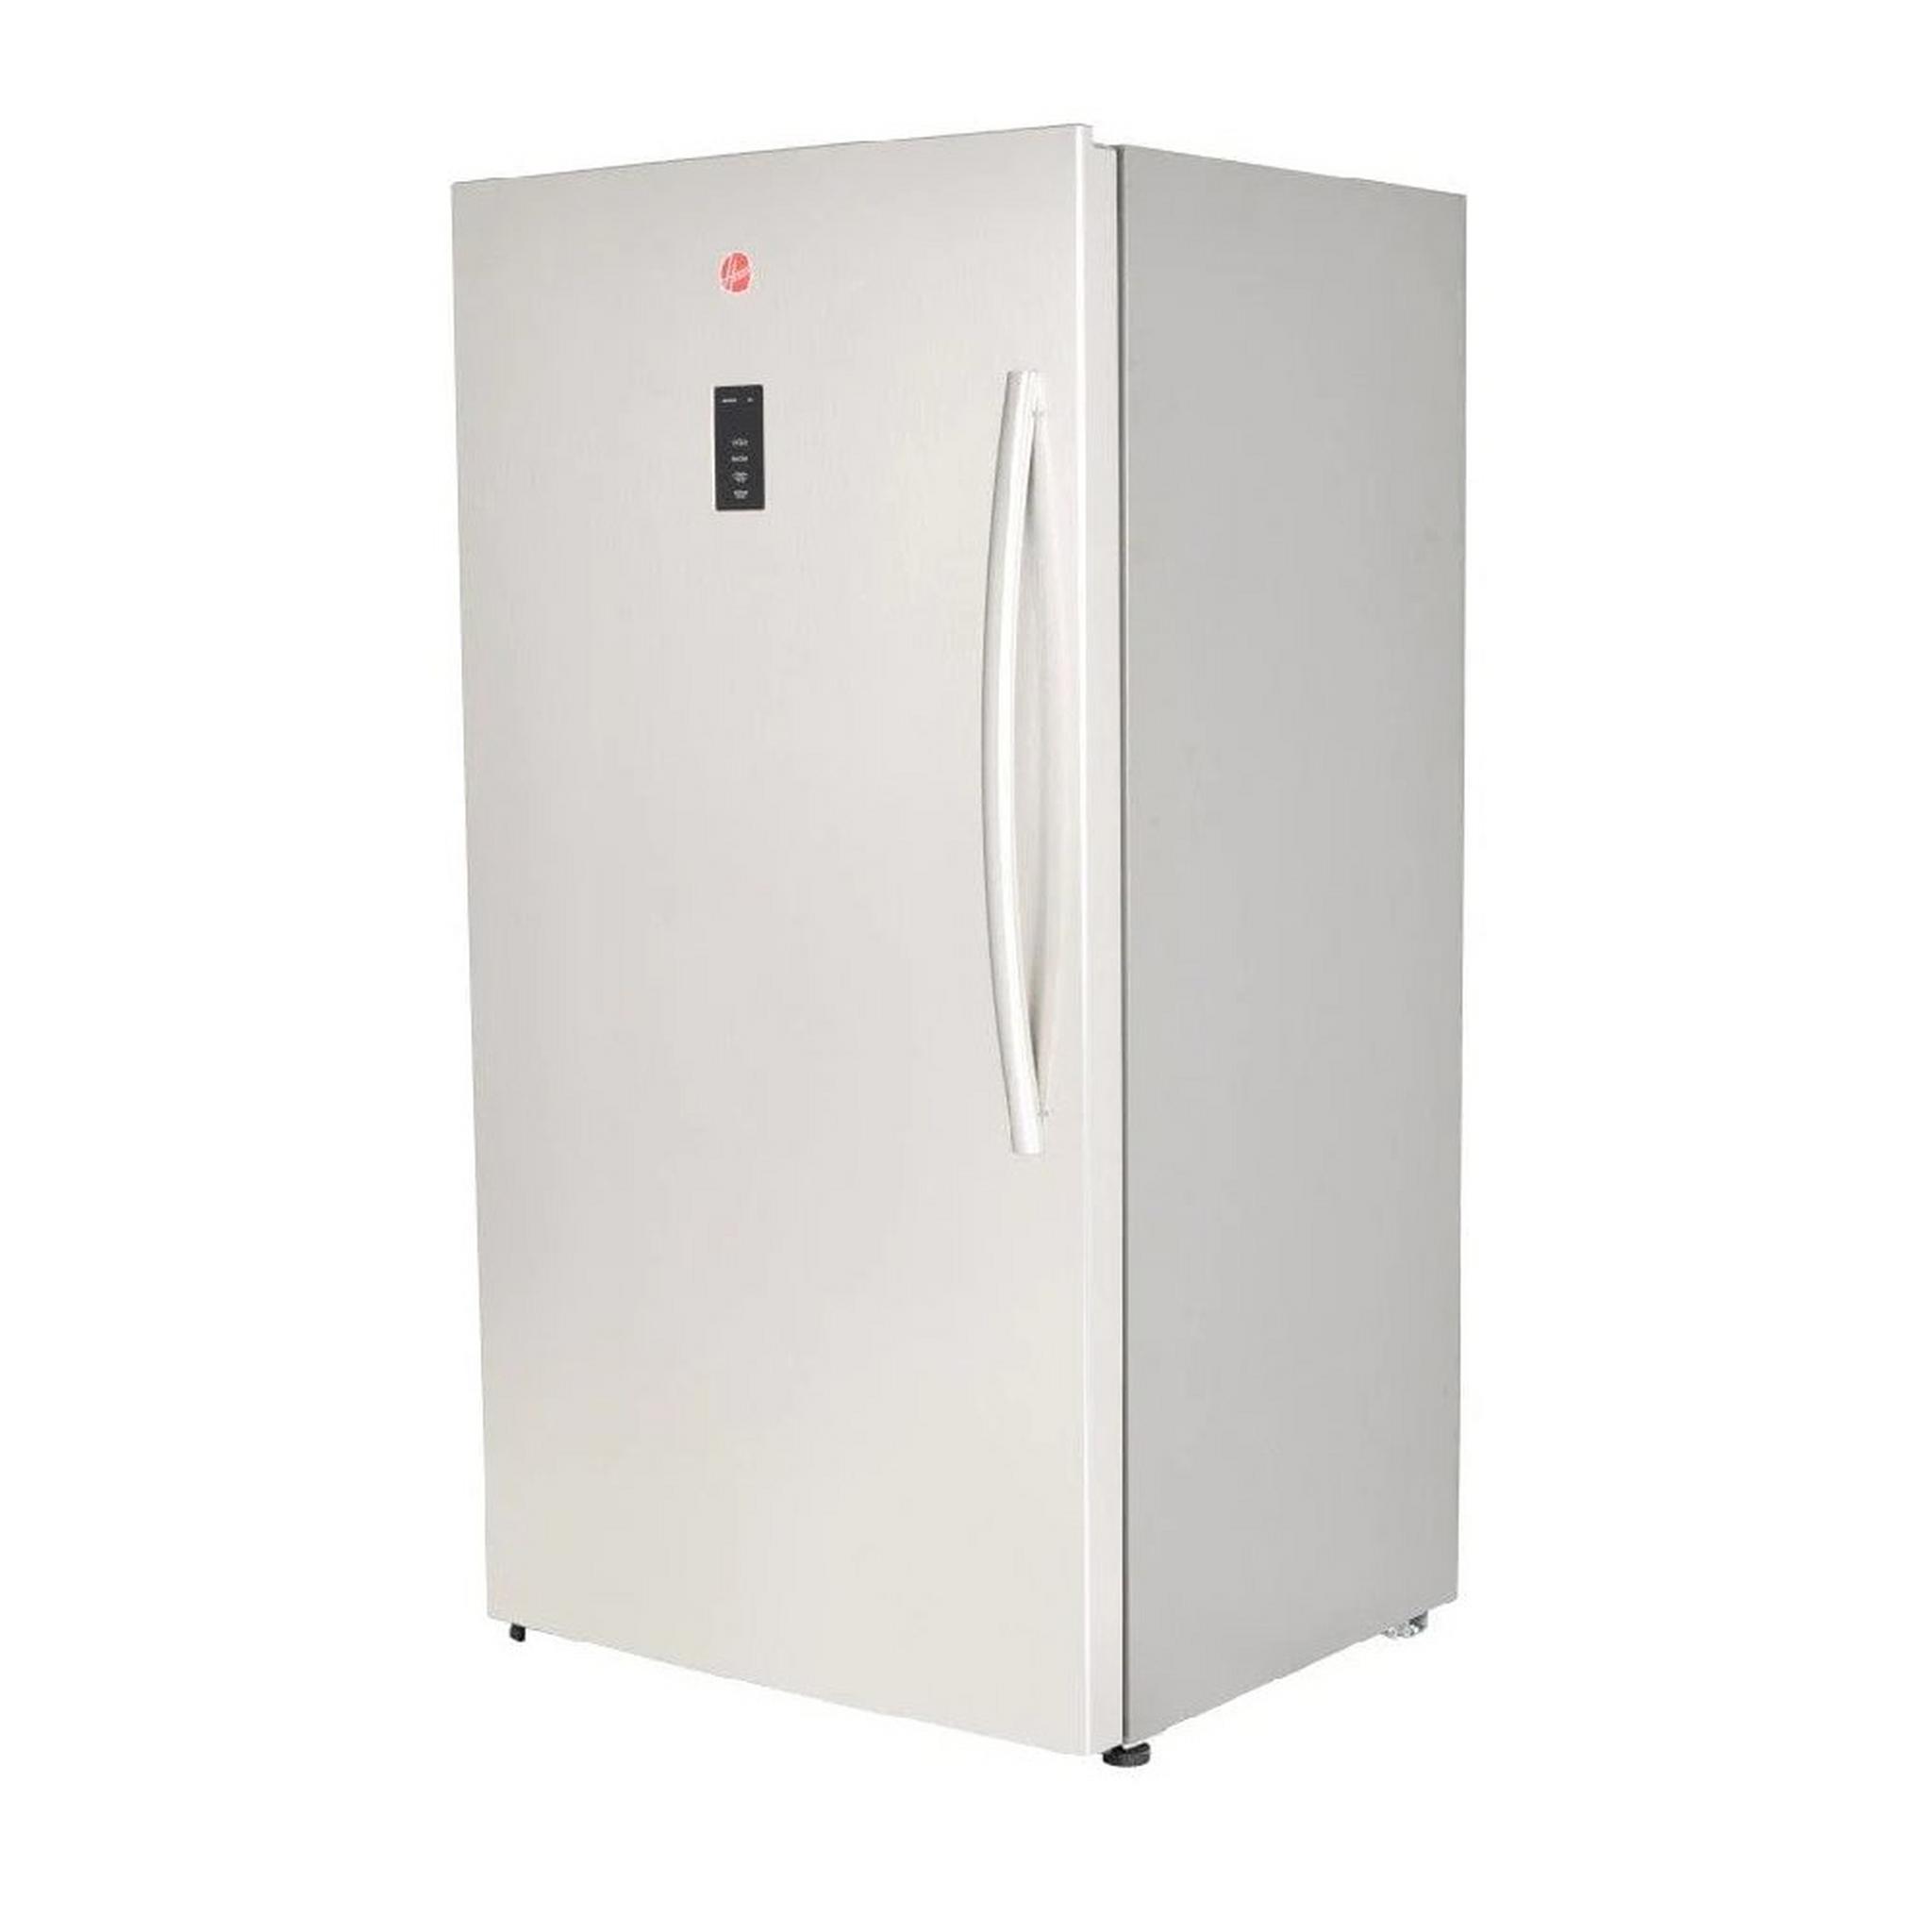 Hoover Upright Freezer, 22.2 CFT, 630-Liters, HSFR-H630-S - Silver